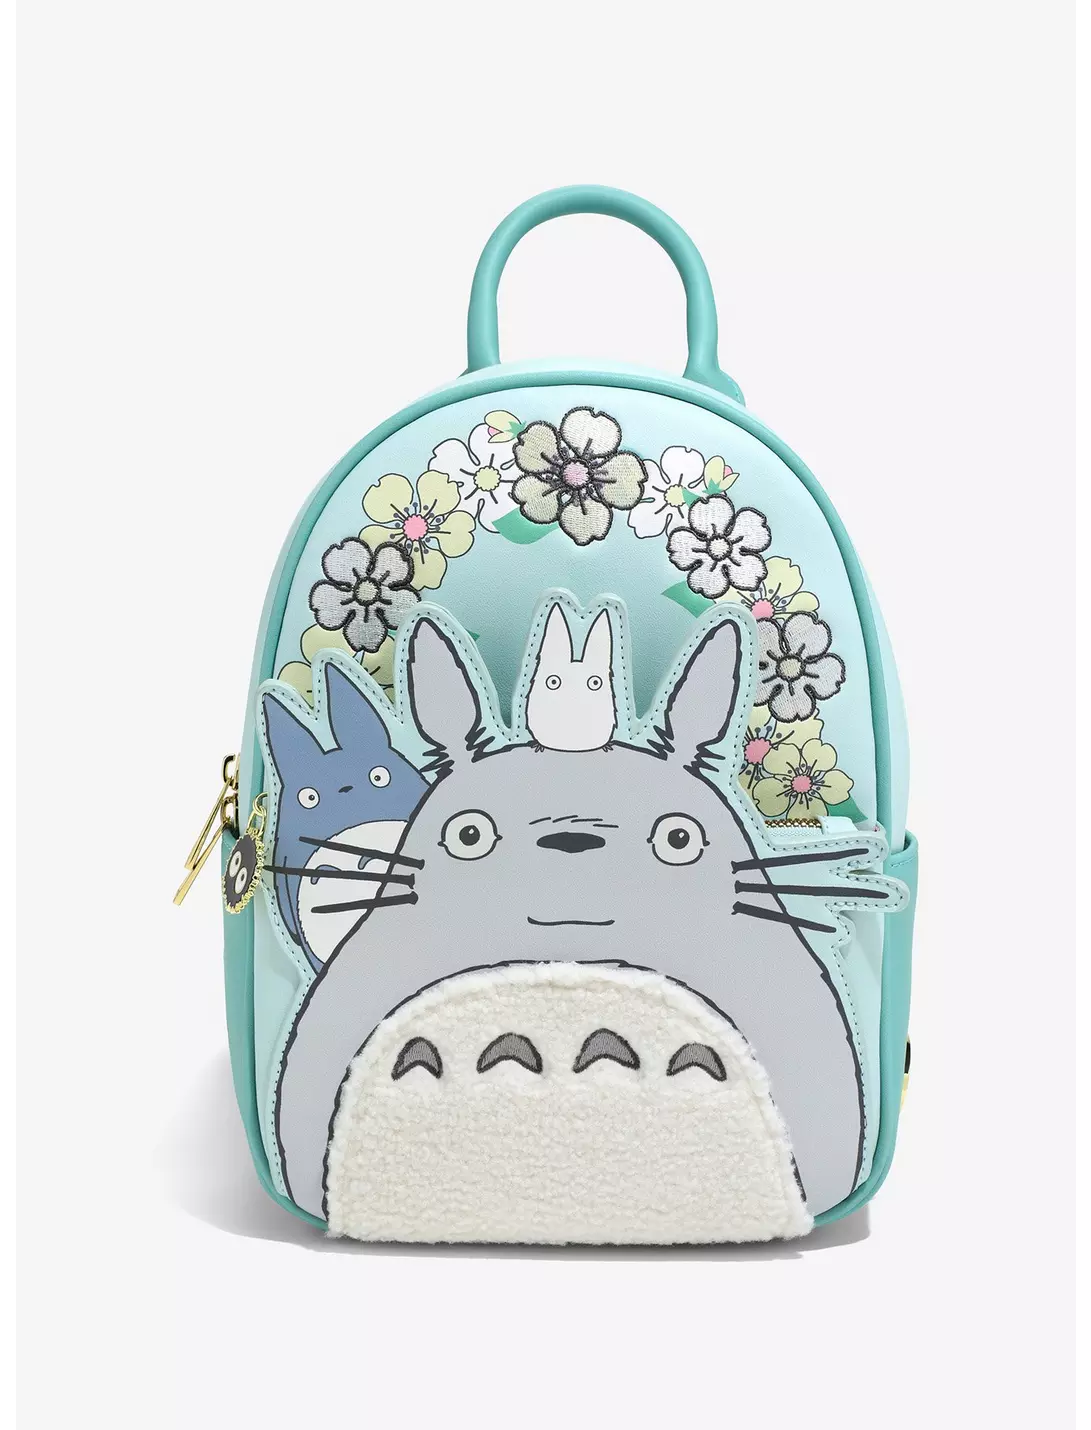 Bolsa Mochila Totoro Exclusiva 24